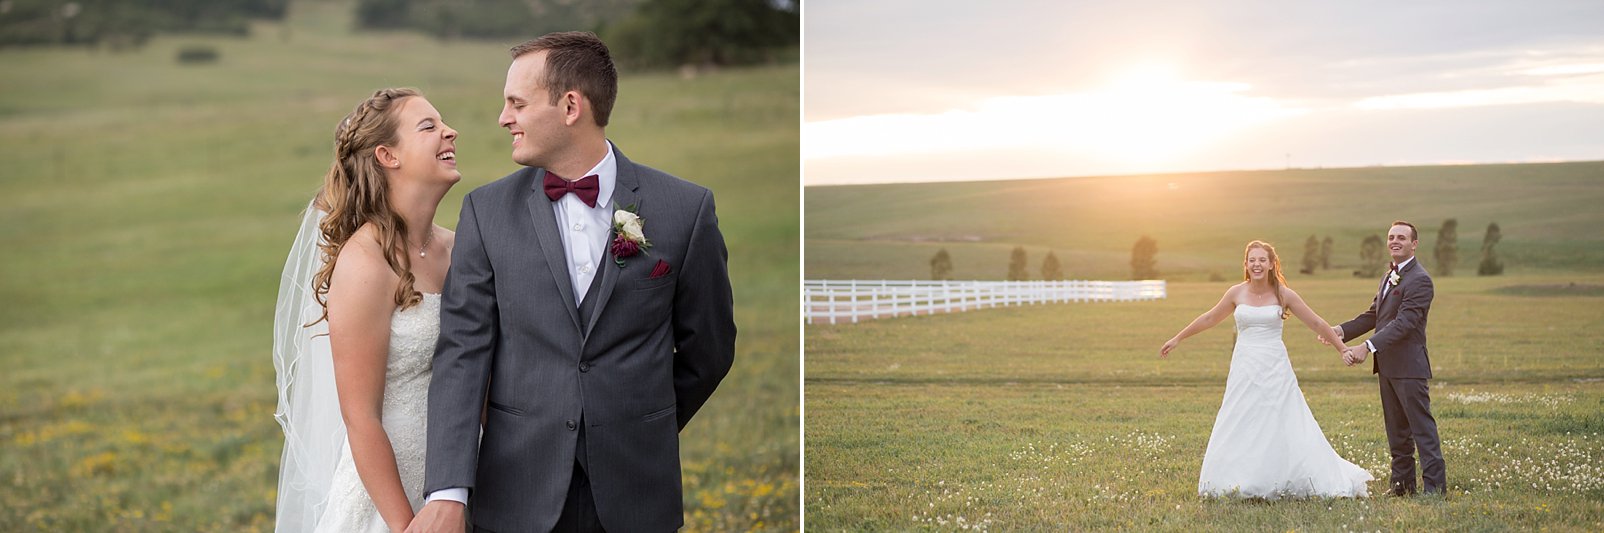 bride & groom sunset photos